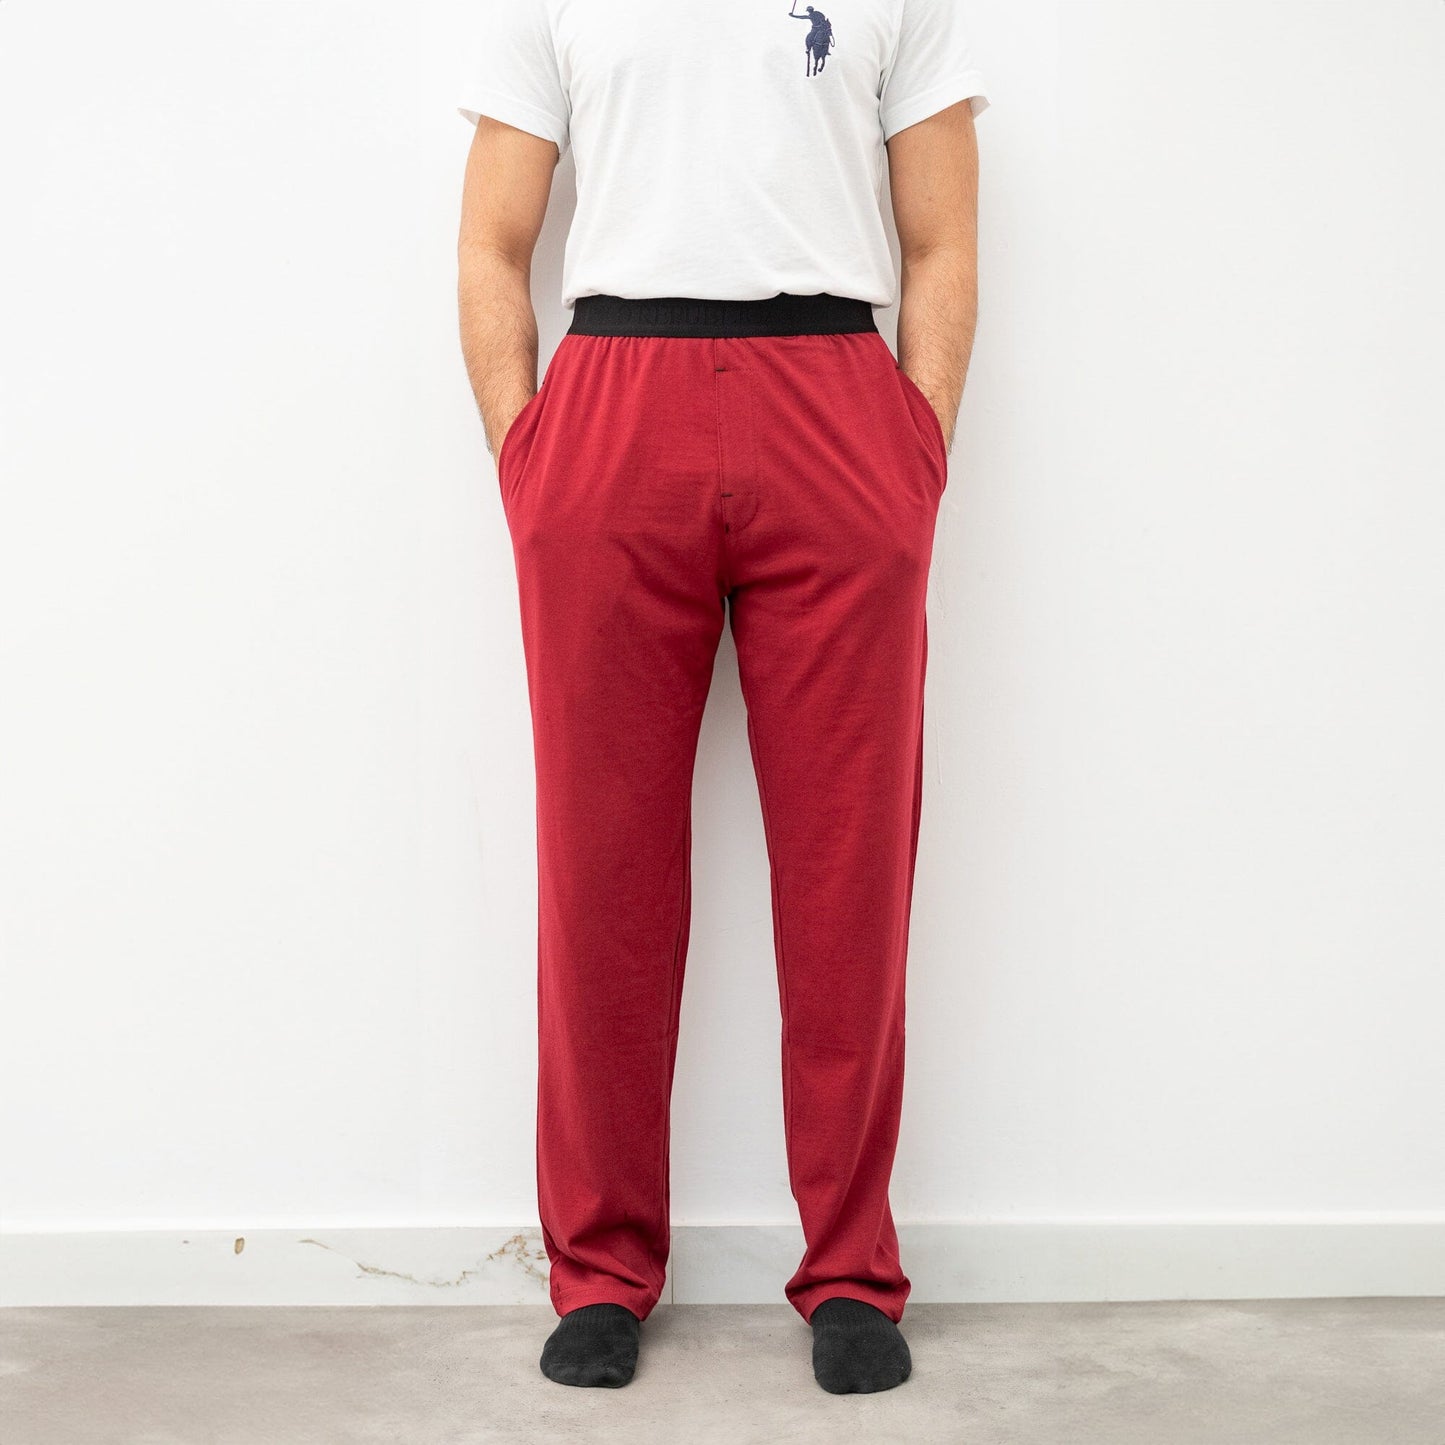 Polo Republica Men's Essentials Jersey Lounge Pants Men's Trousers Polo Republica Maroon S 